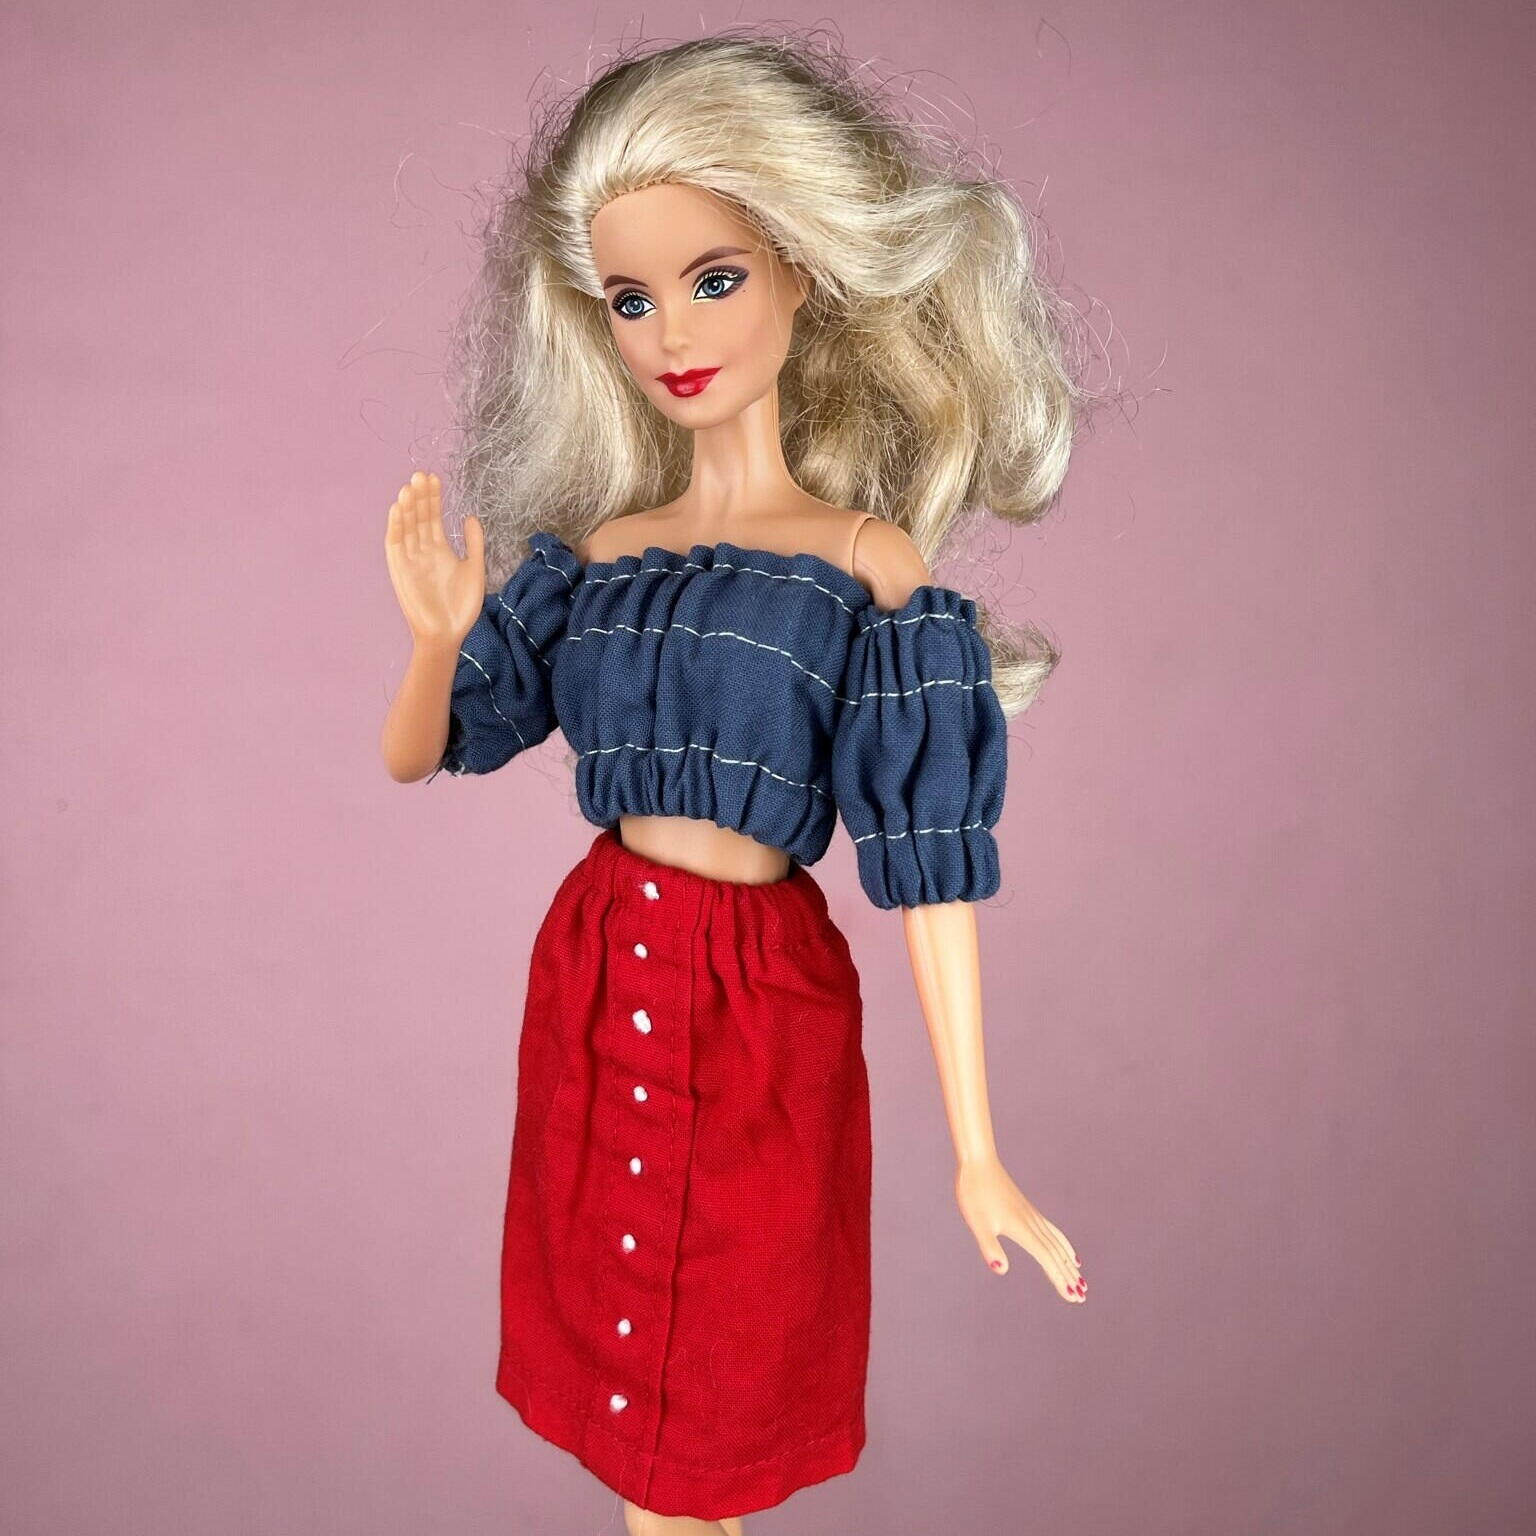 How to make DIY three Barbie doll purses! Mini Chanel purse! - YouTube